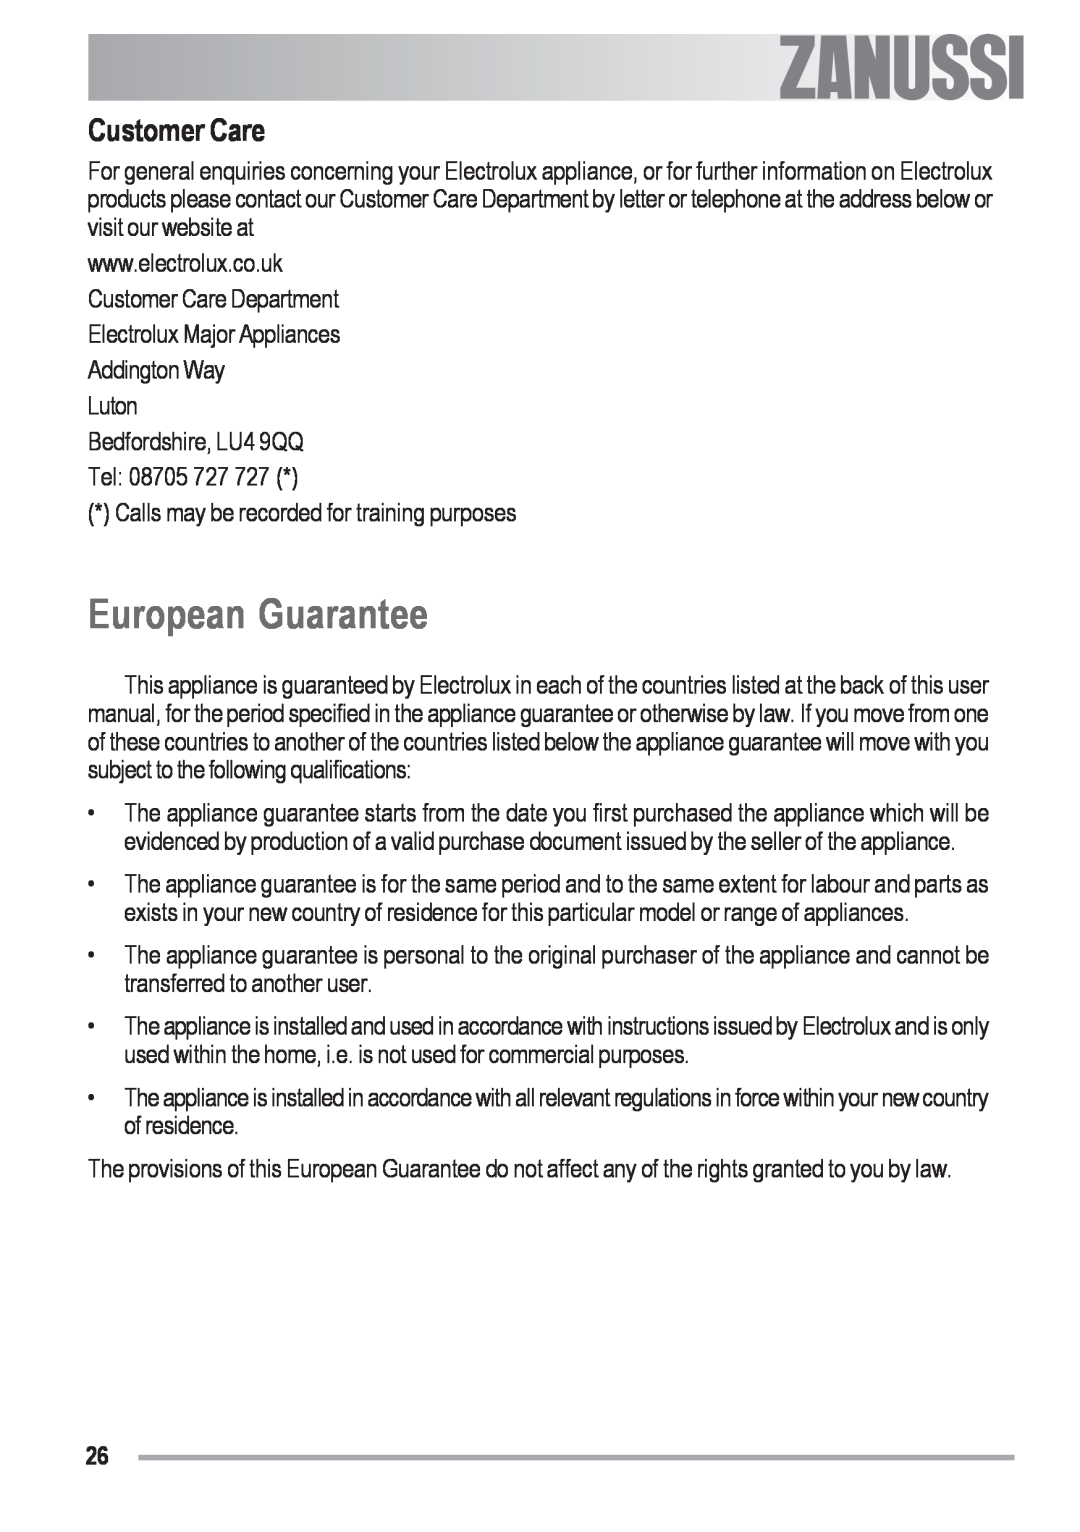 Zanussi ZOB 330 manual European Guarantee, Customer Care, Luton Bedfordshire, LU4 9QQ Tel 08705 727 